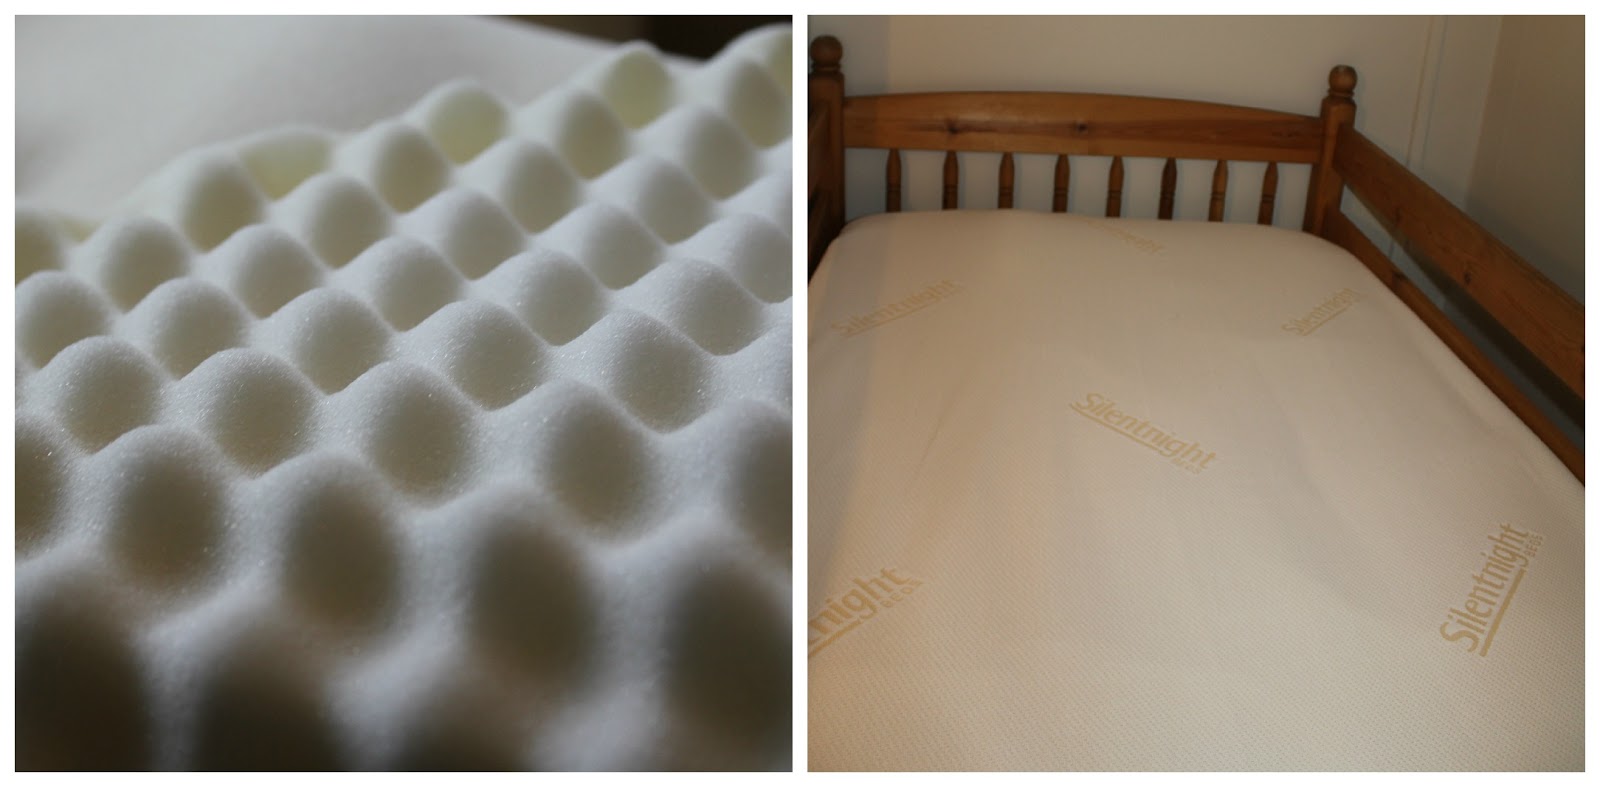 silent night memory foam mattress cover washing instructions